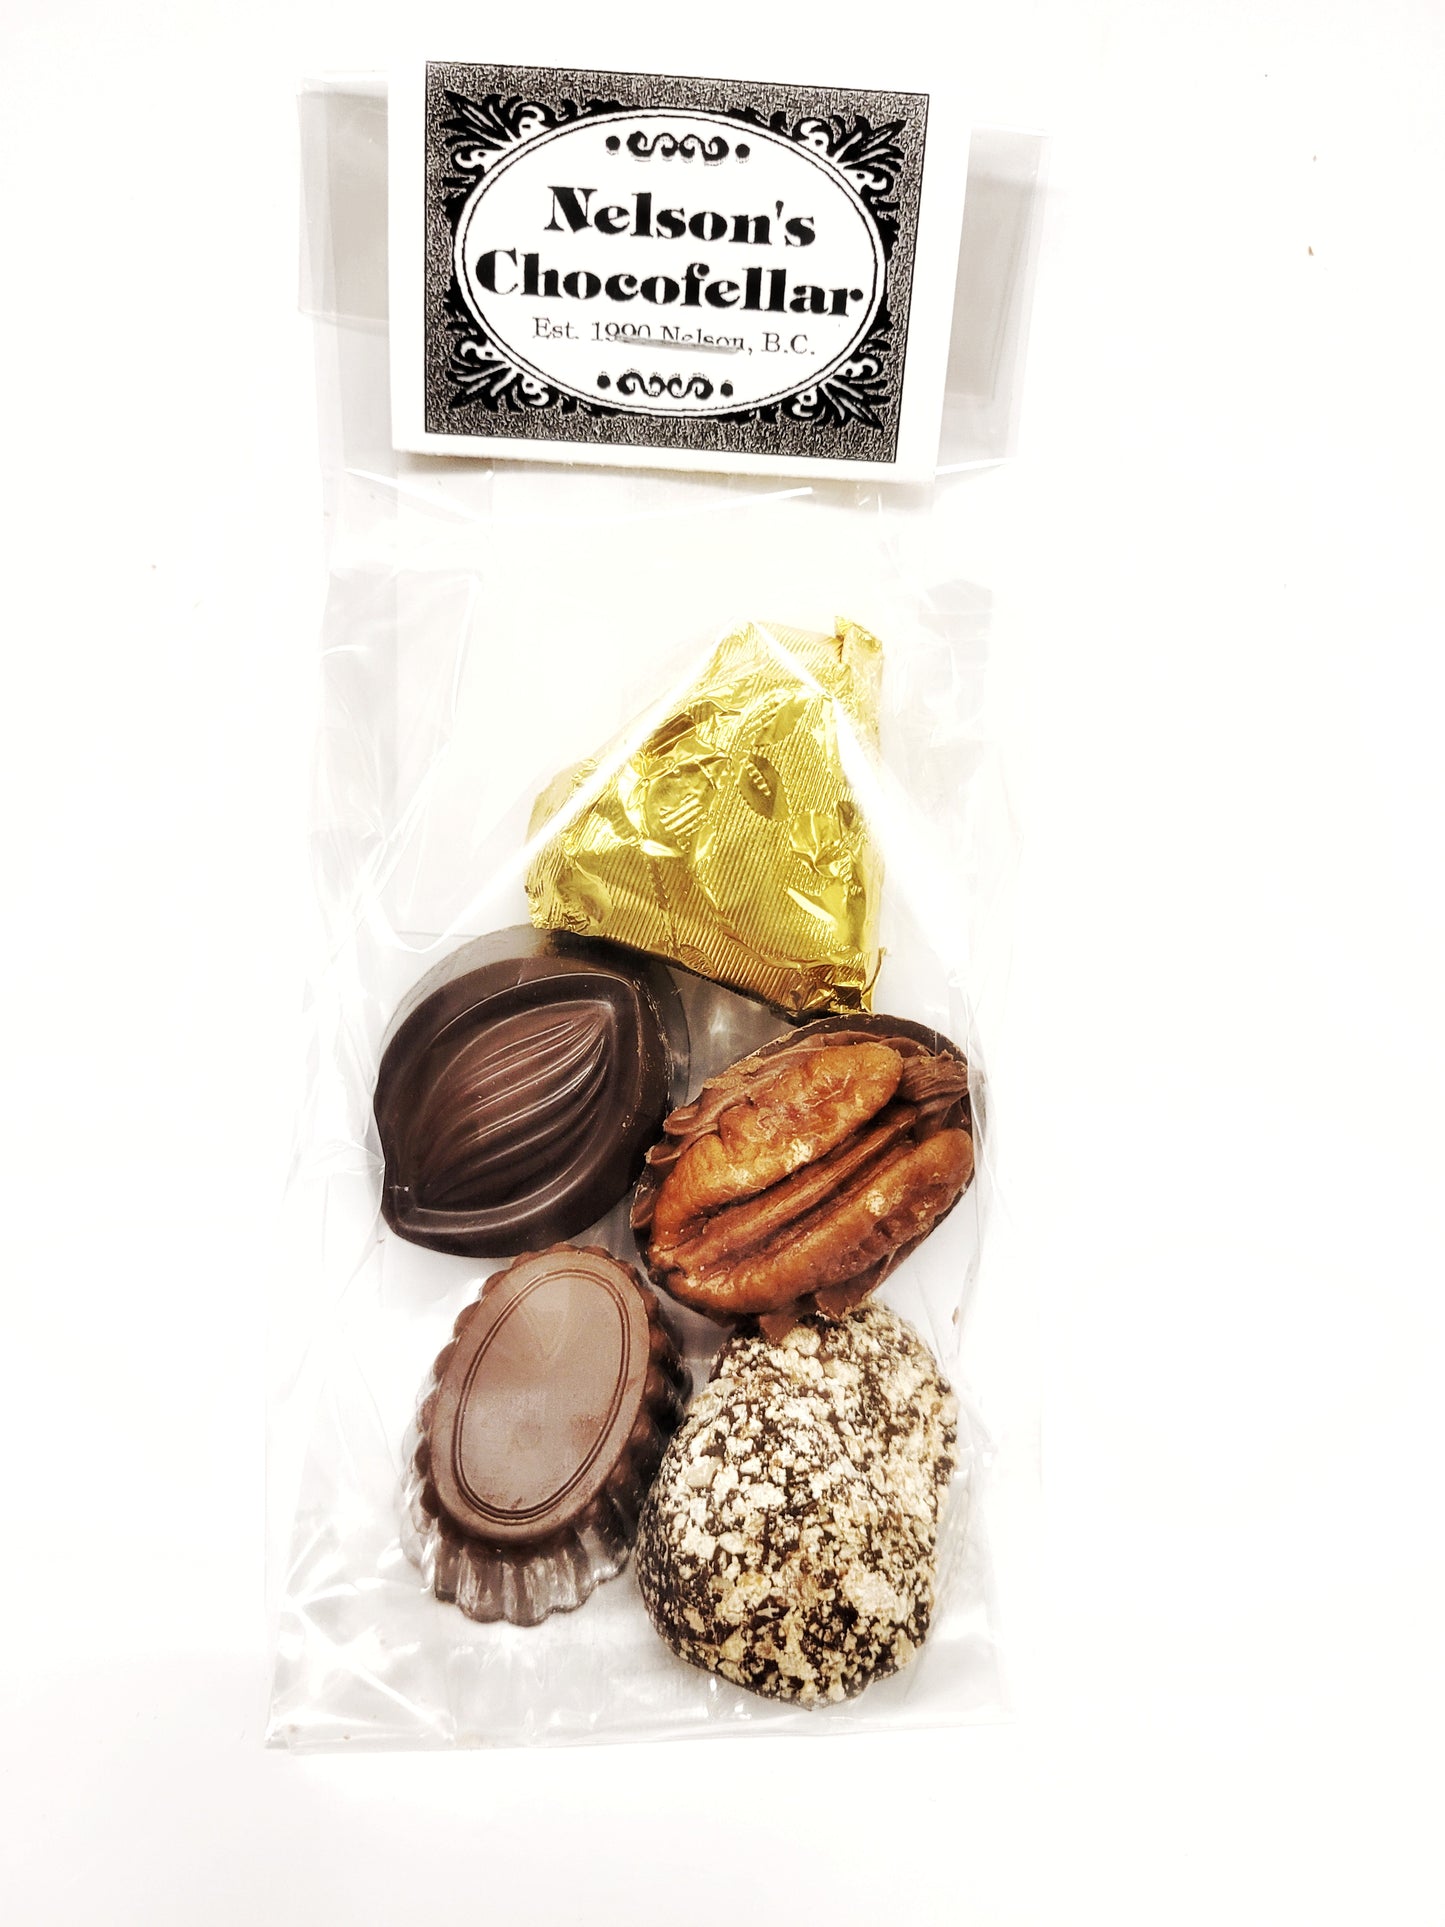 Sample Cello bag of 5 Assorted Chocolates